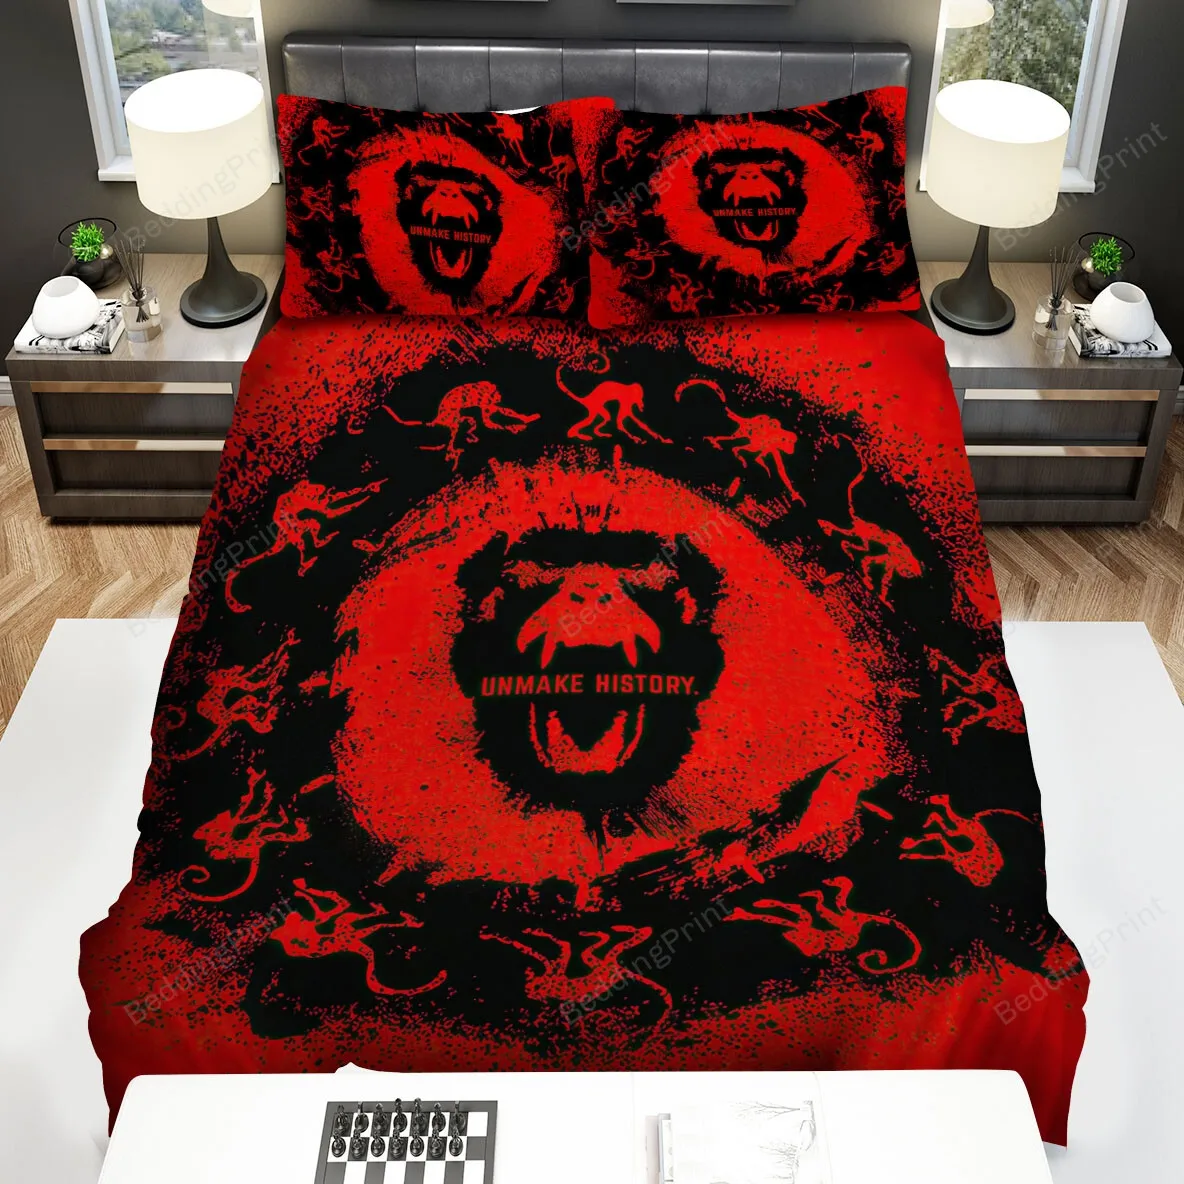 12 Monkeys (20152018) Season One Movie Poster Bed Sheets Spread Comforter Duvet Cover Bedding Sets